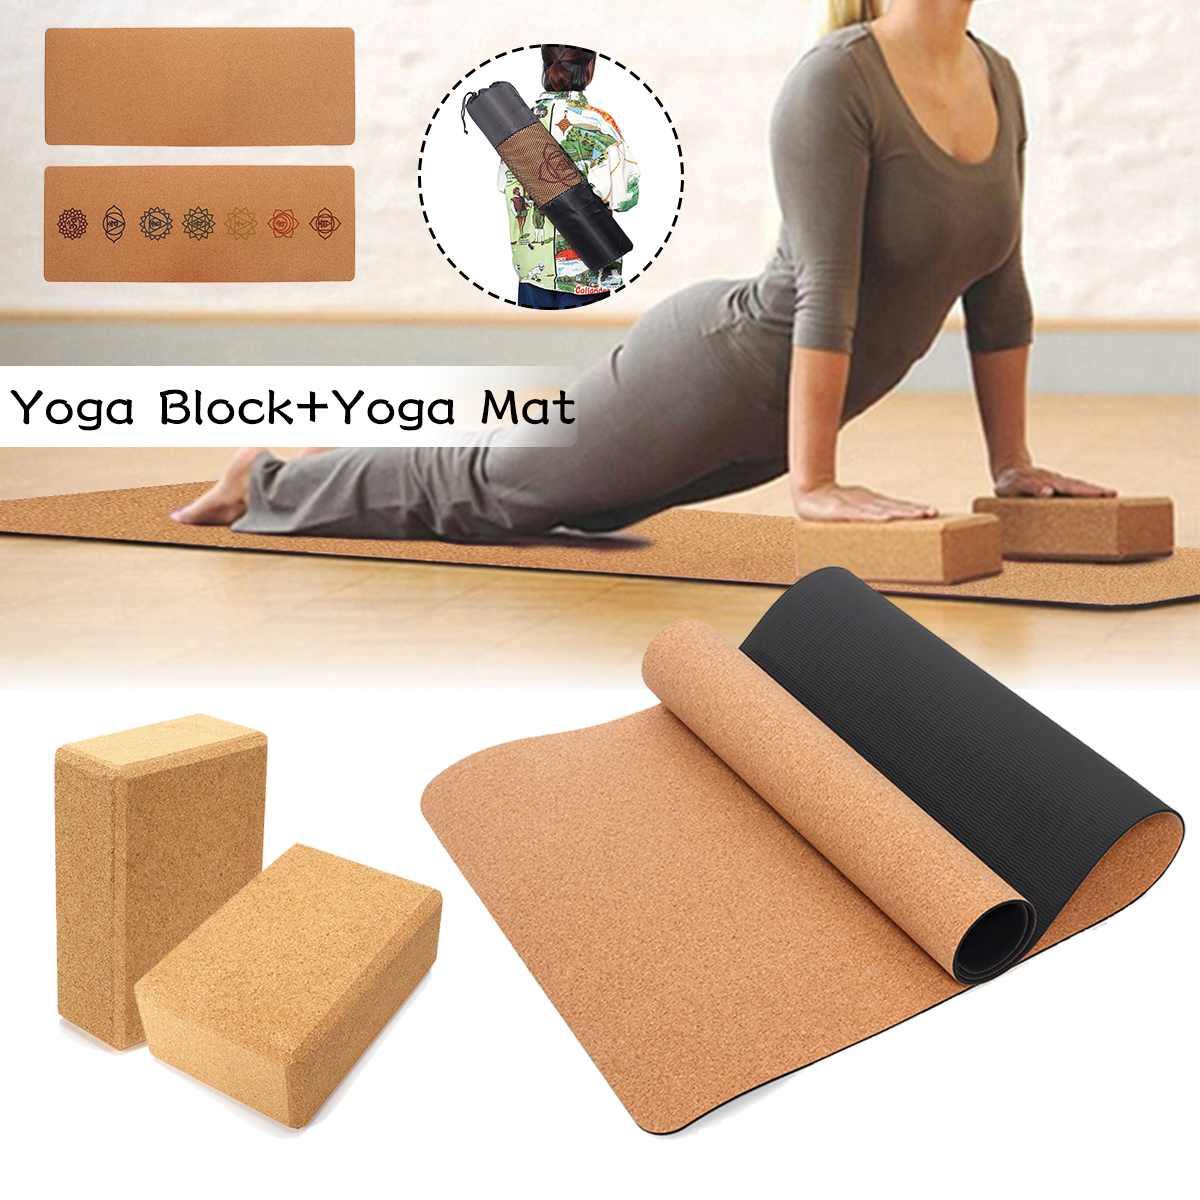 Eco-friendly cork yoga mat made from organic & natural cork 61x183cm -  BESTSELLER! - Cork yoga mats & cork yoga block - Experts in cork products!